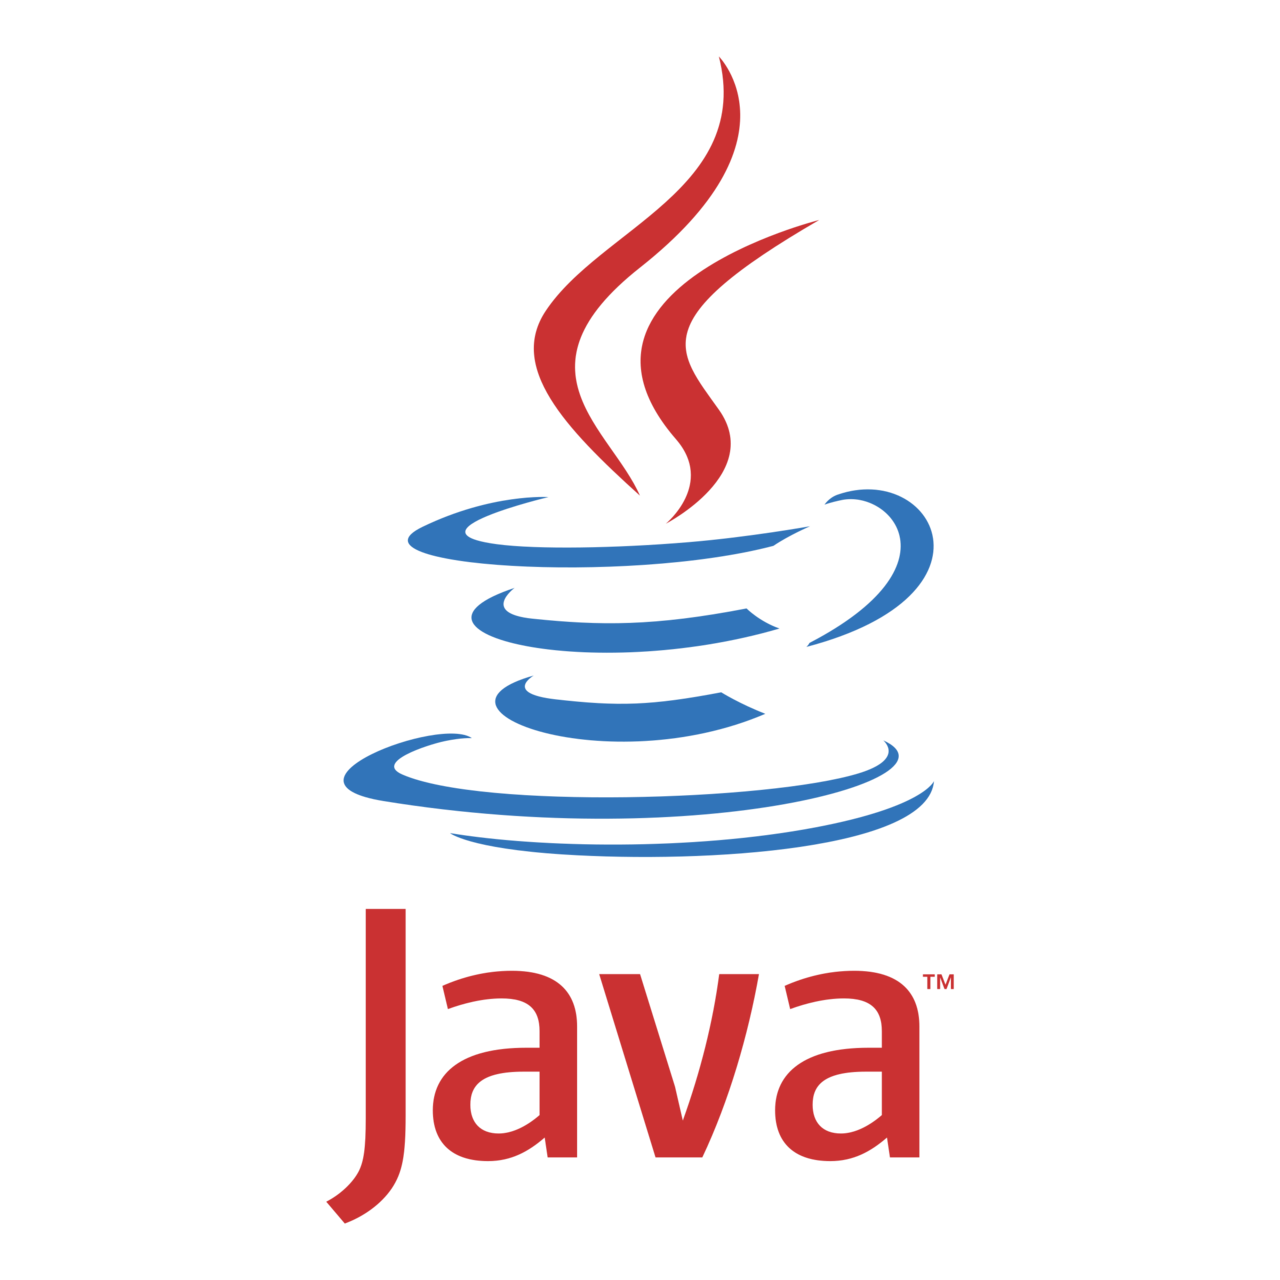 Java logo from Bluebird